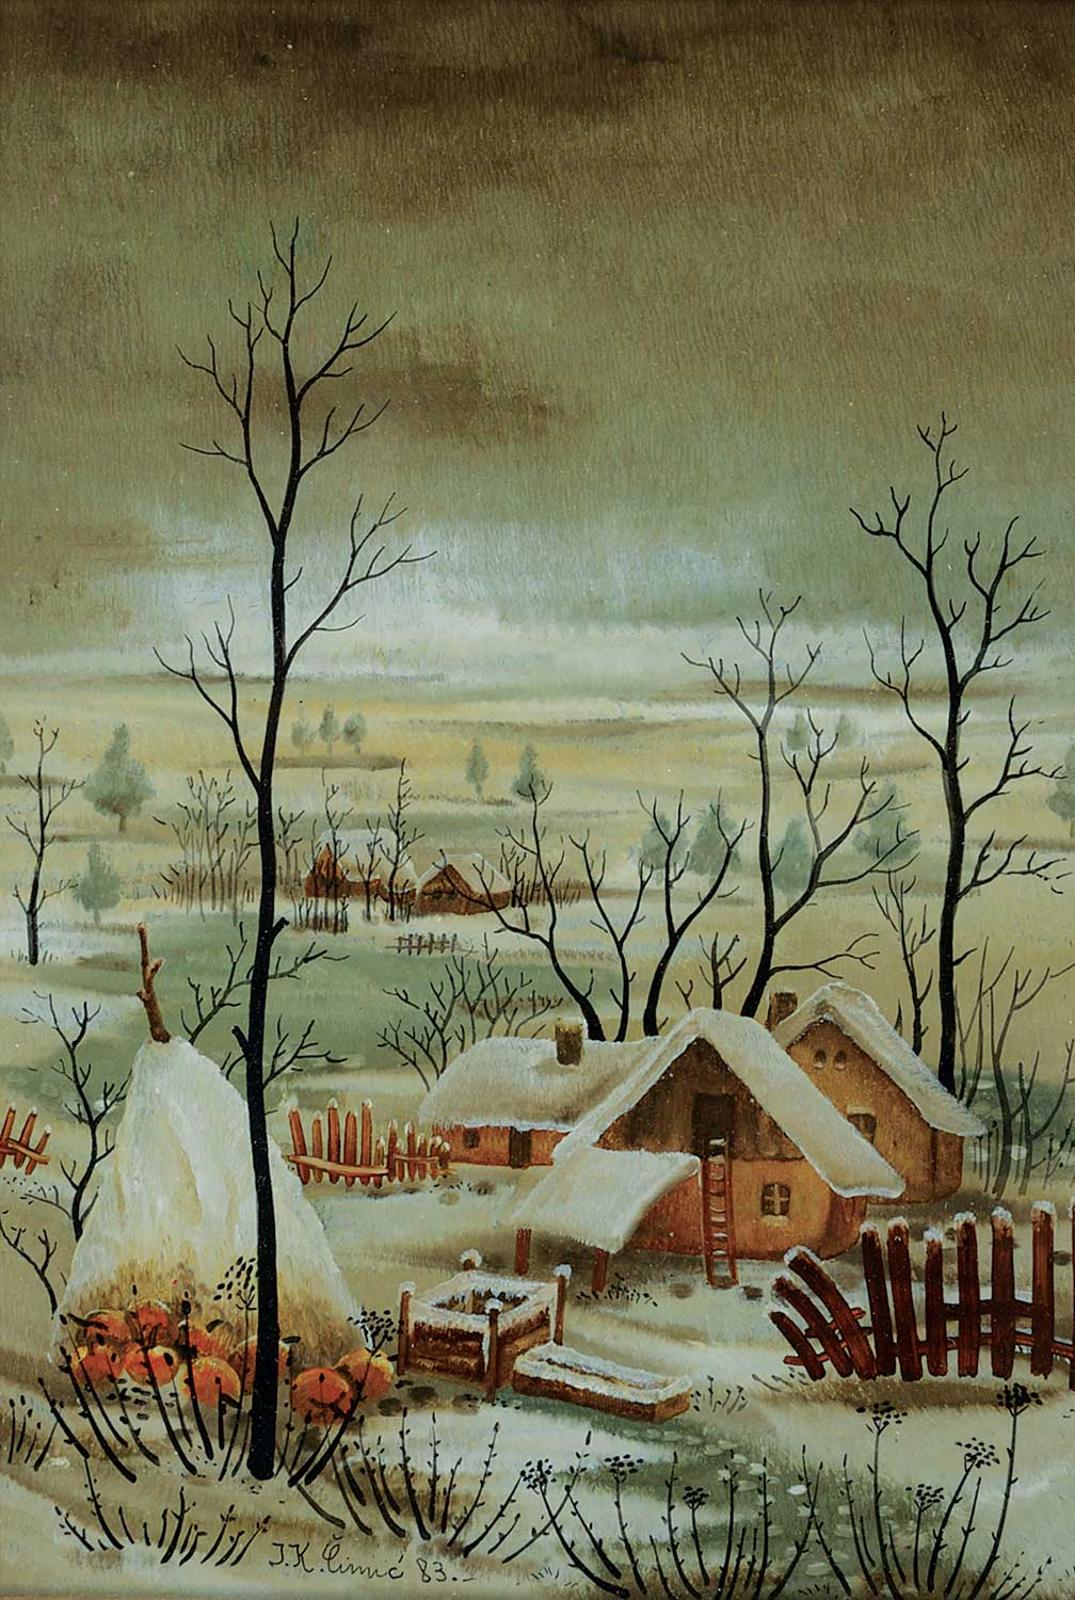 Inge K. Cimic - Untitled - Village in Winter